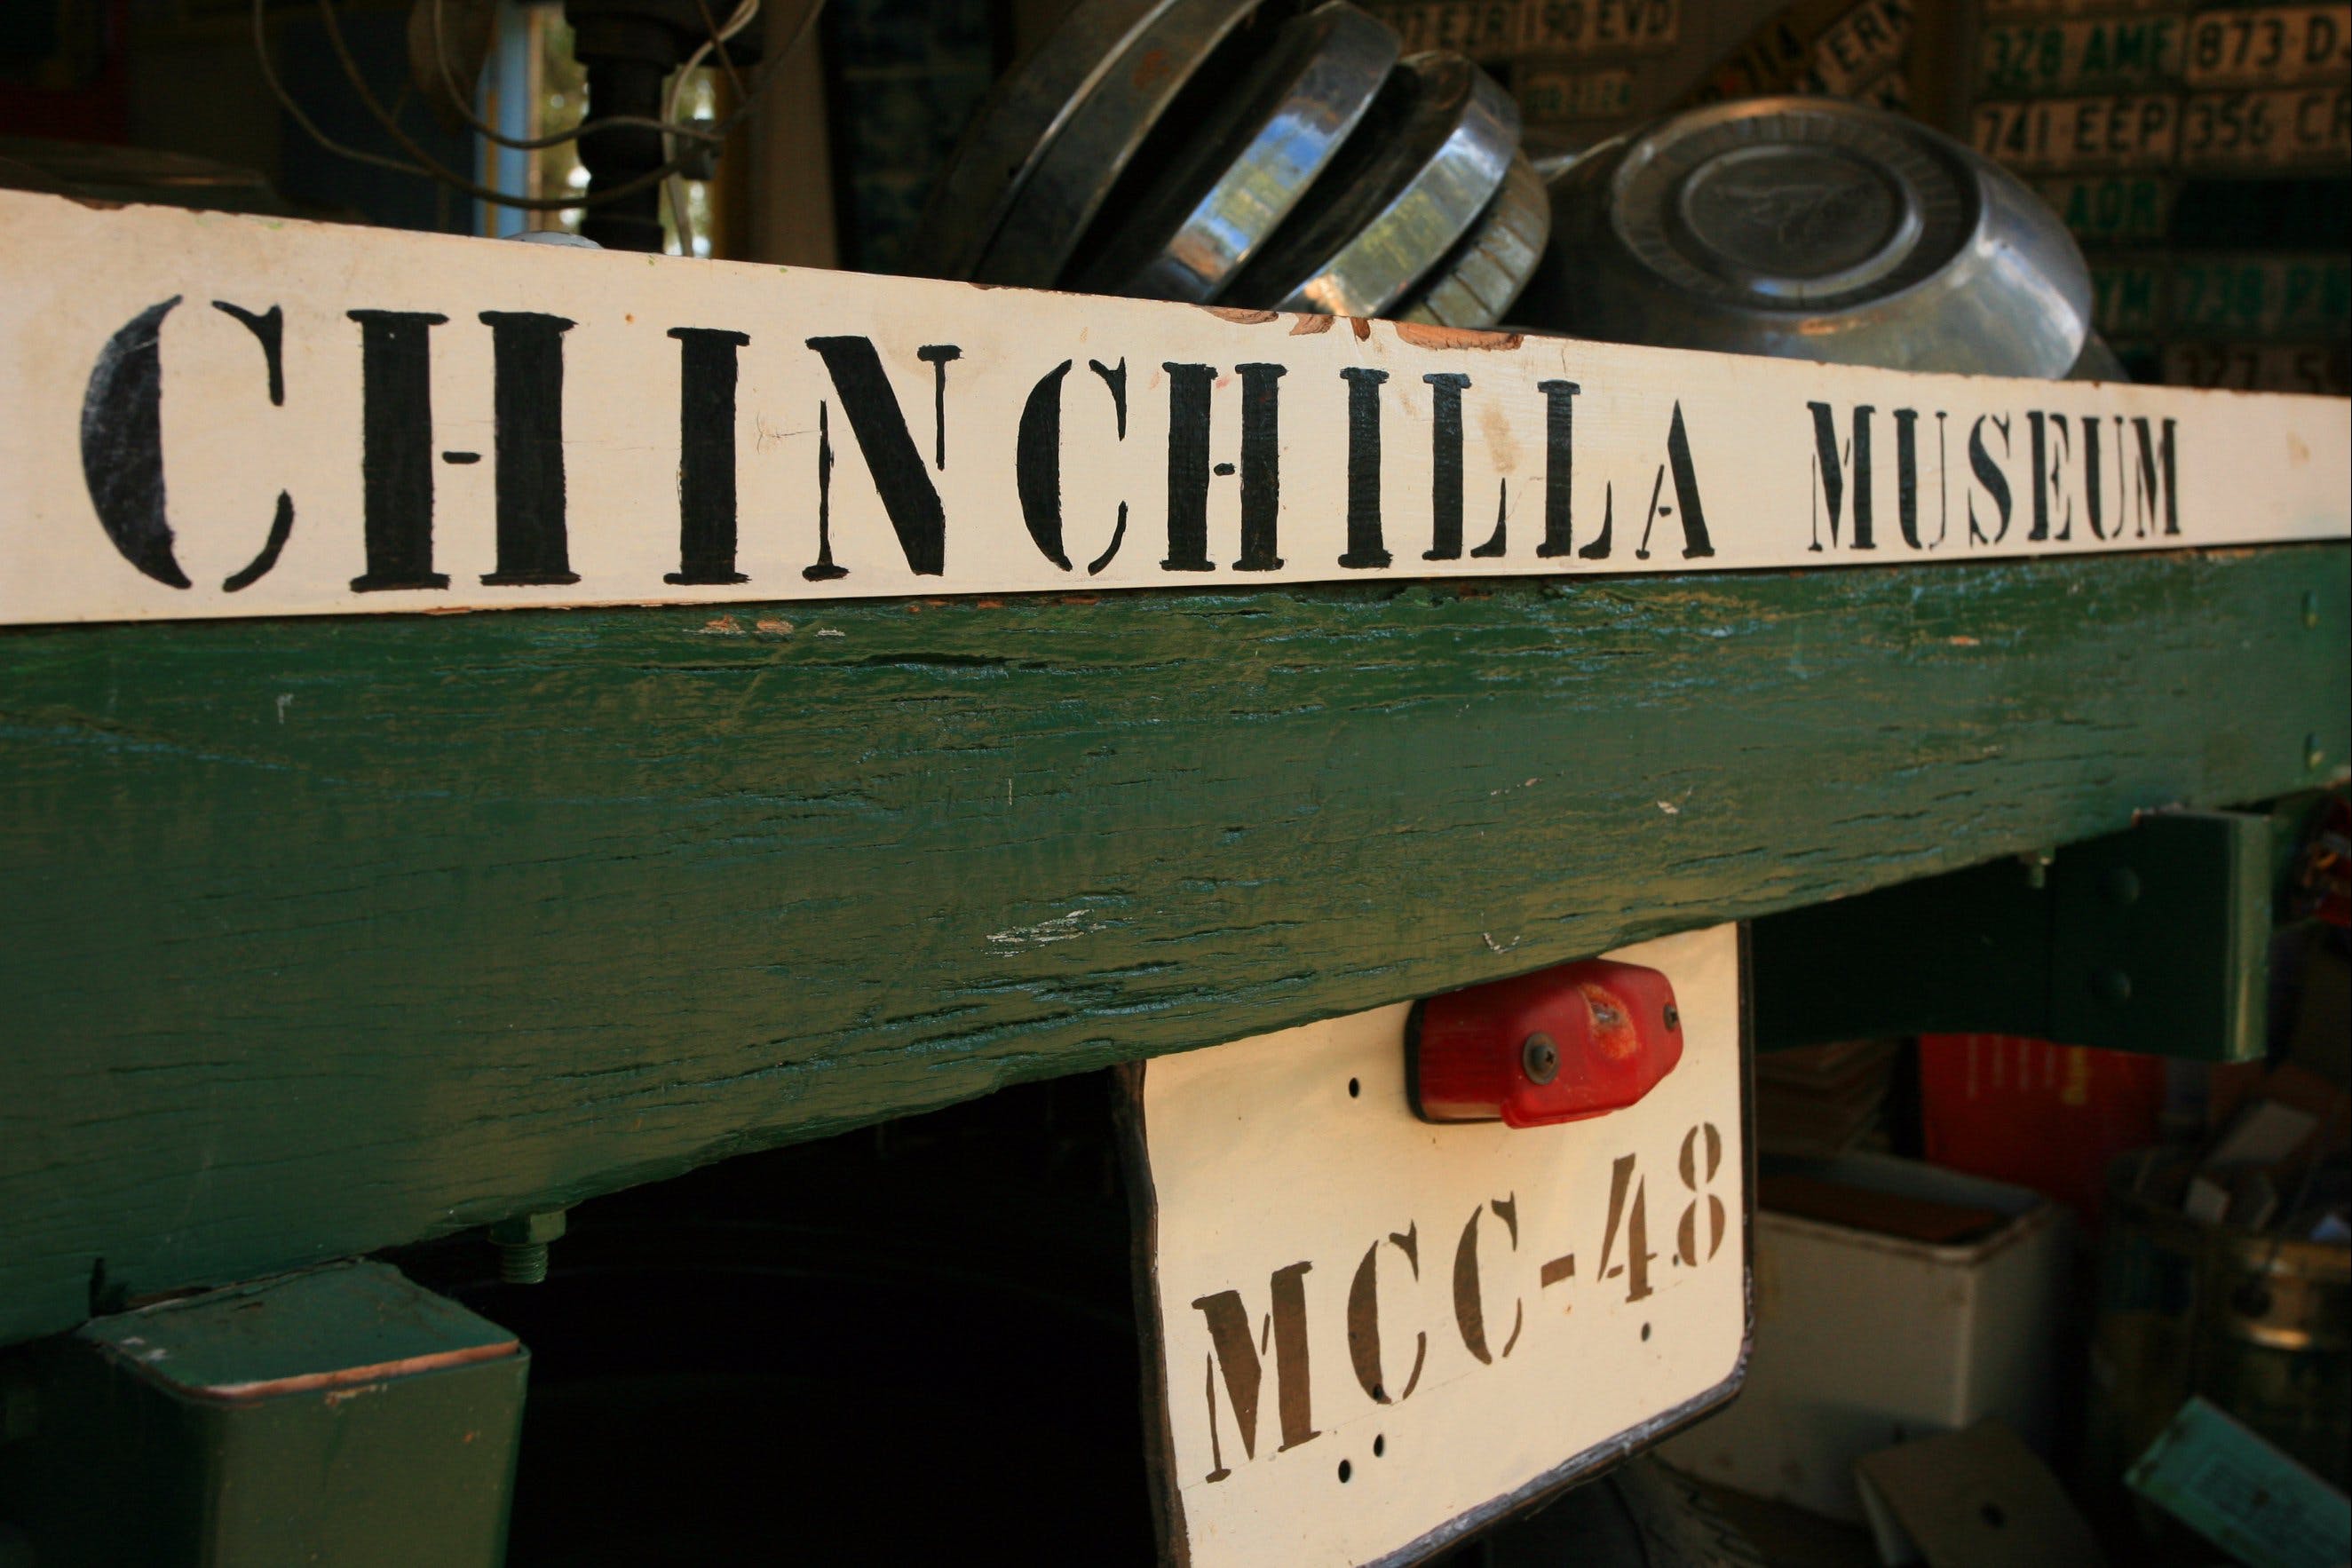 Chinchilla Historical Museum - Accommodation in Bendigo